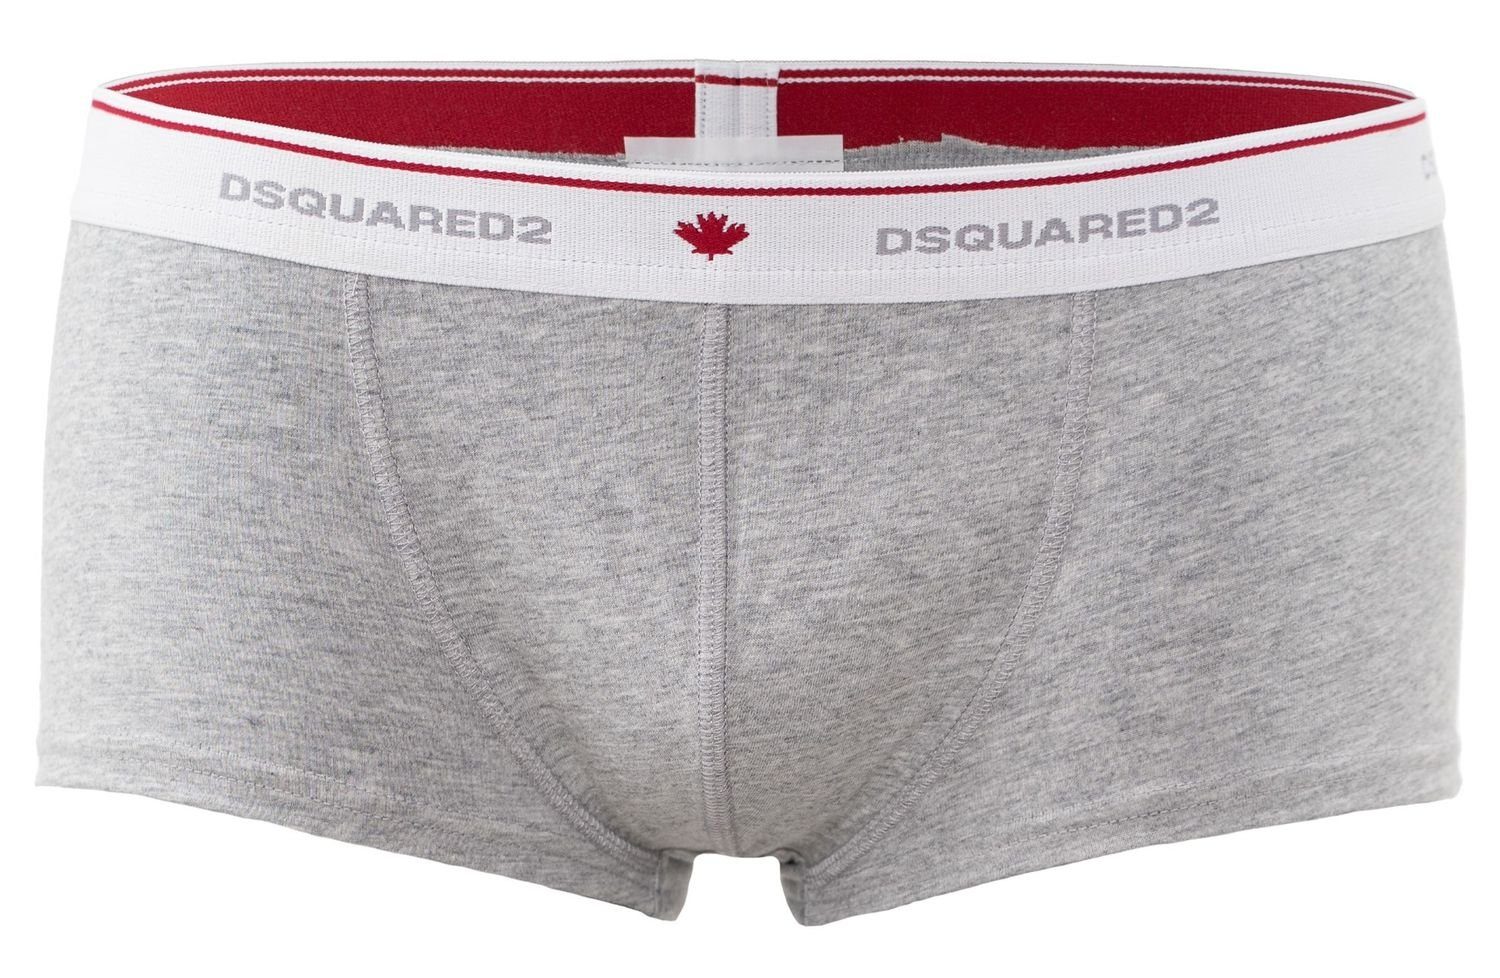 Dsquared2 Trunk Dsquared2 Boxershorts / Pants / Shorts / Boxer in grau Größe M / L / XL / XXL (1-St)